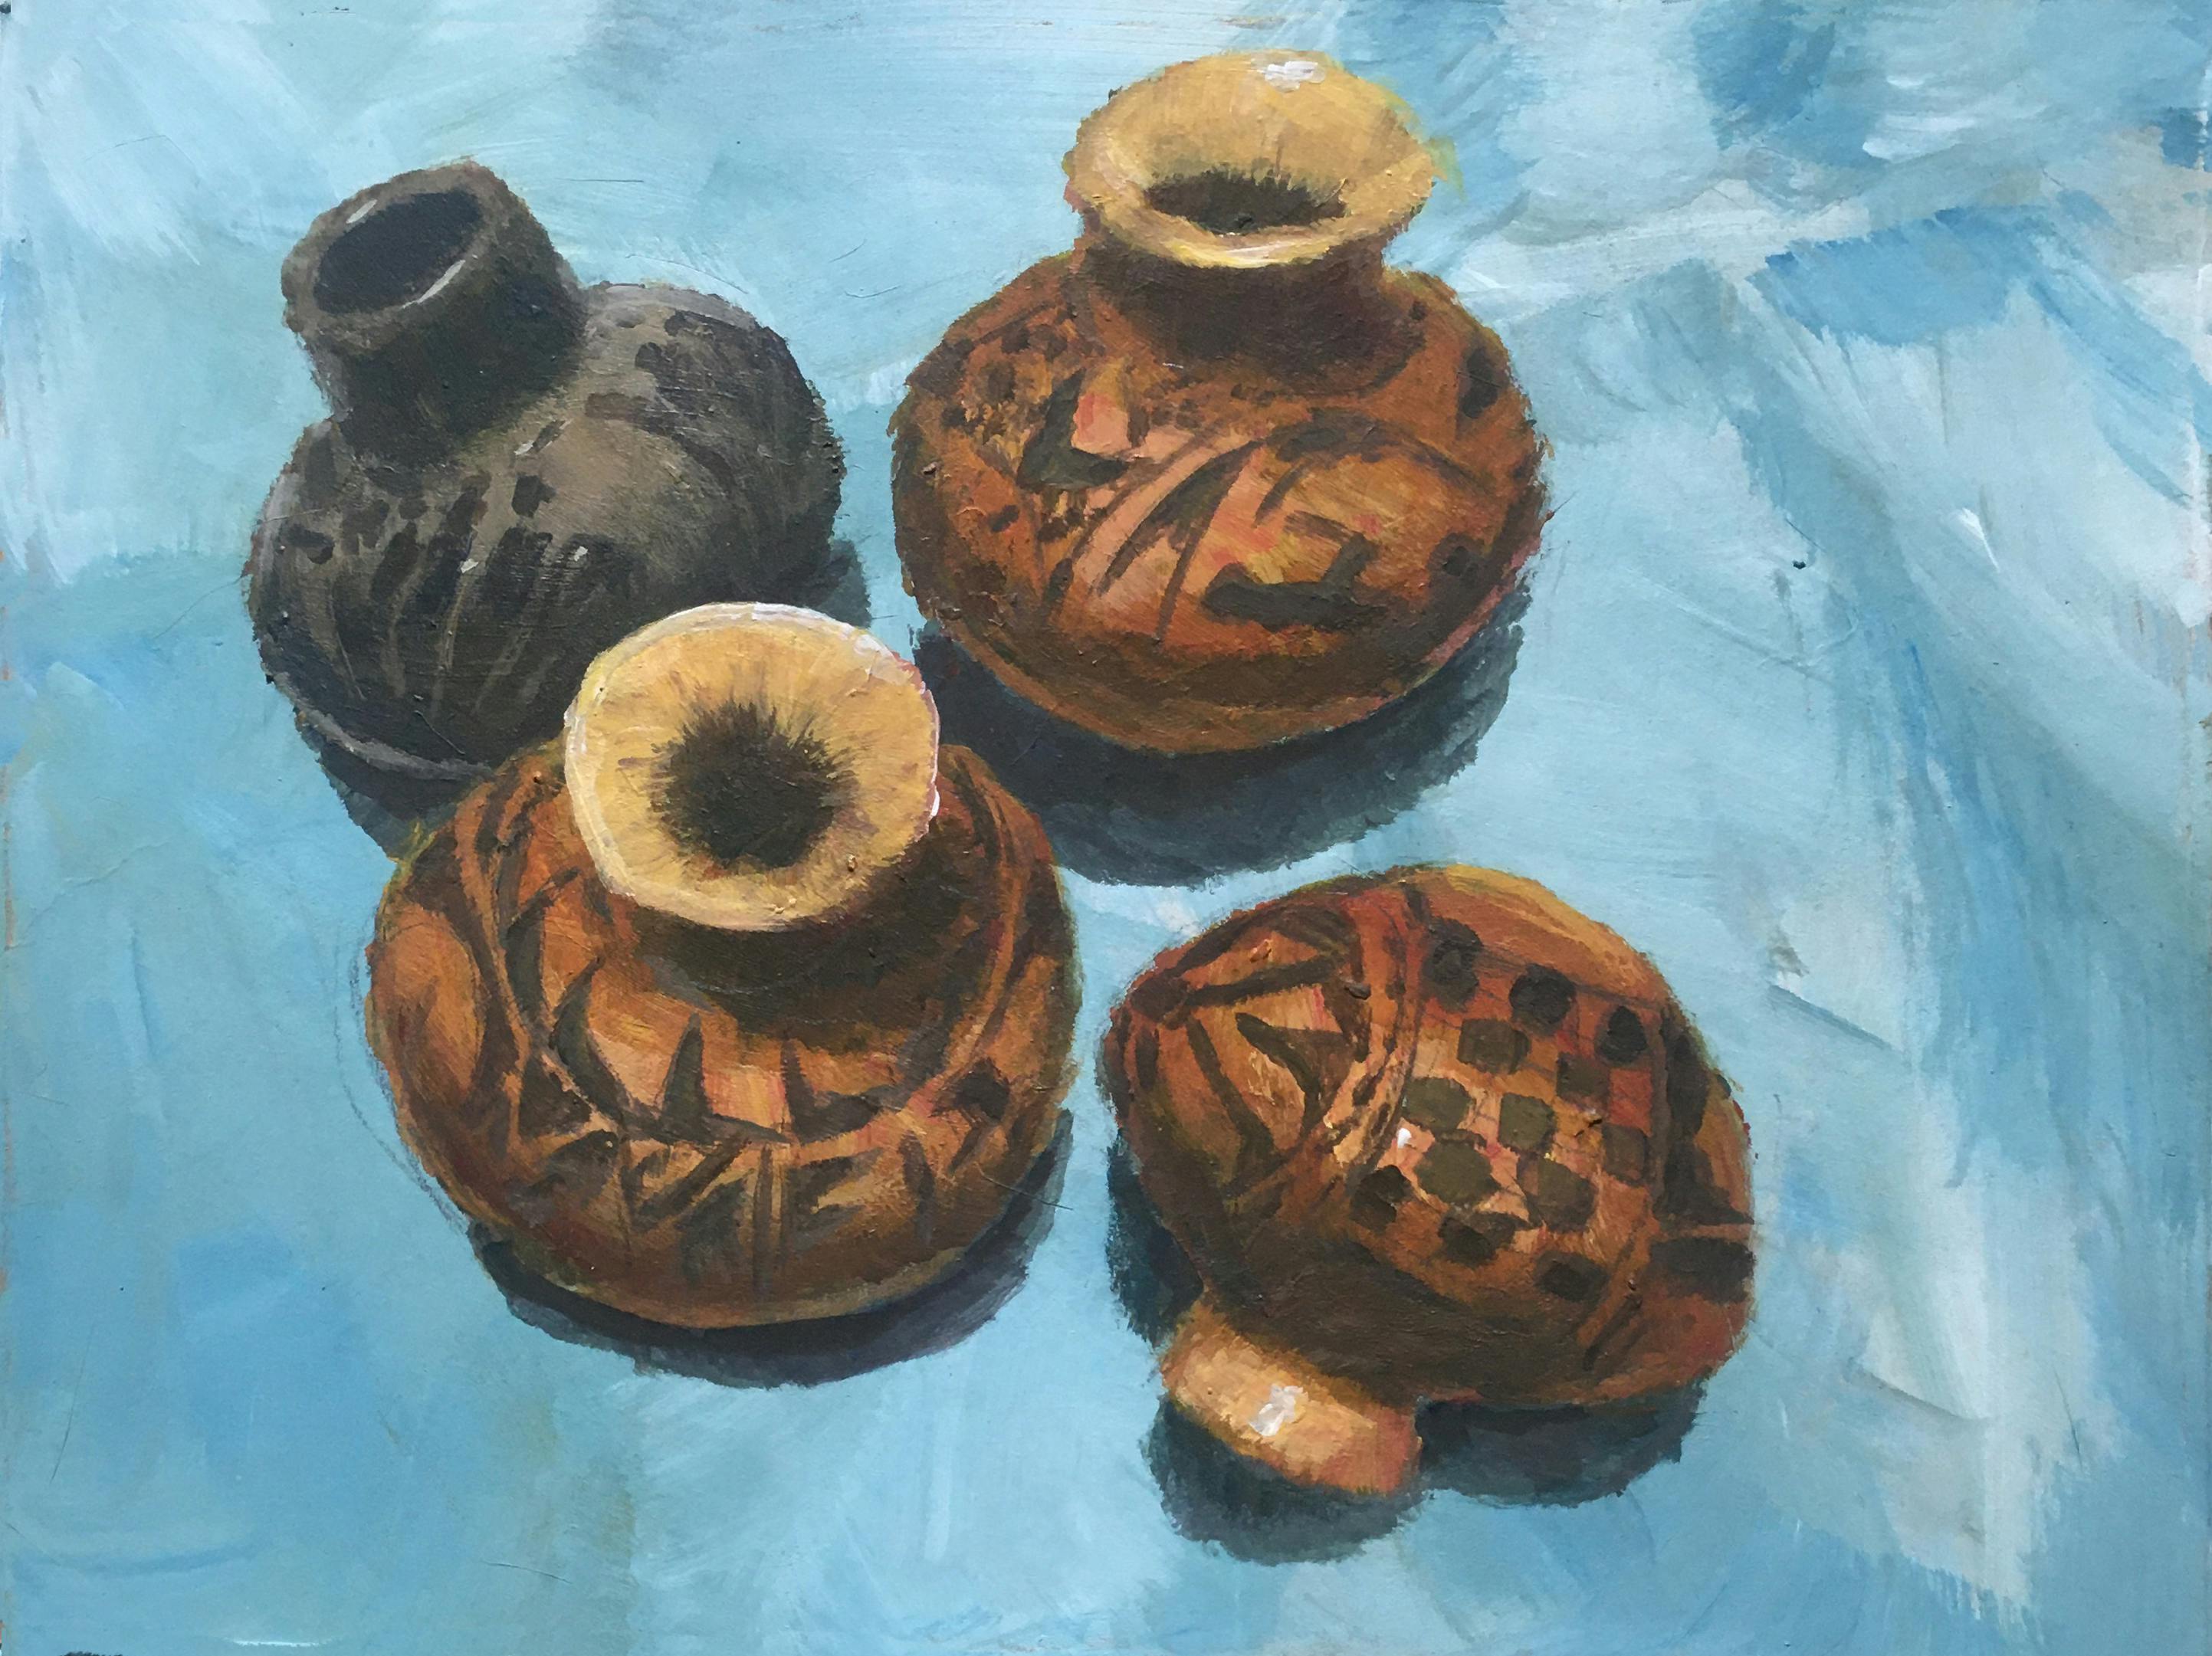 A still life painting of pots